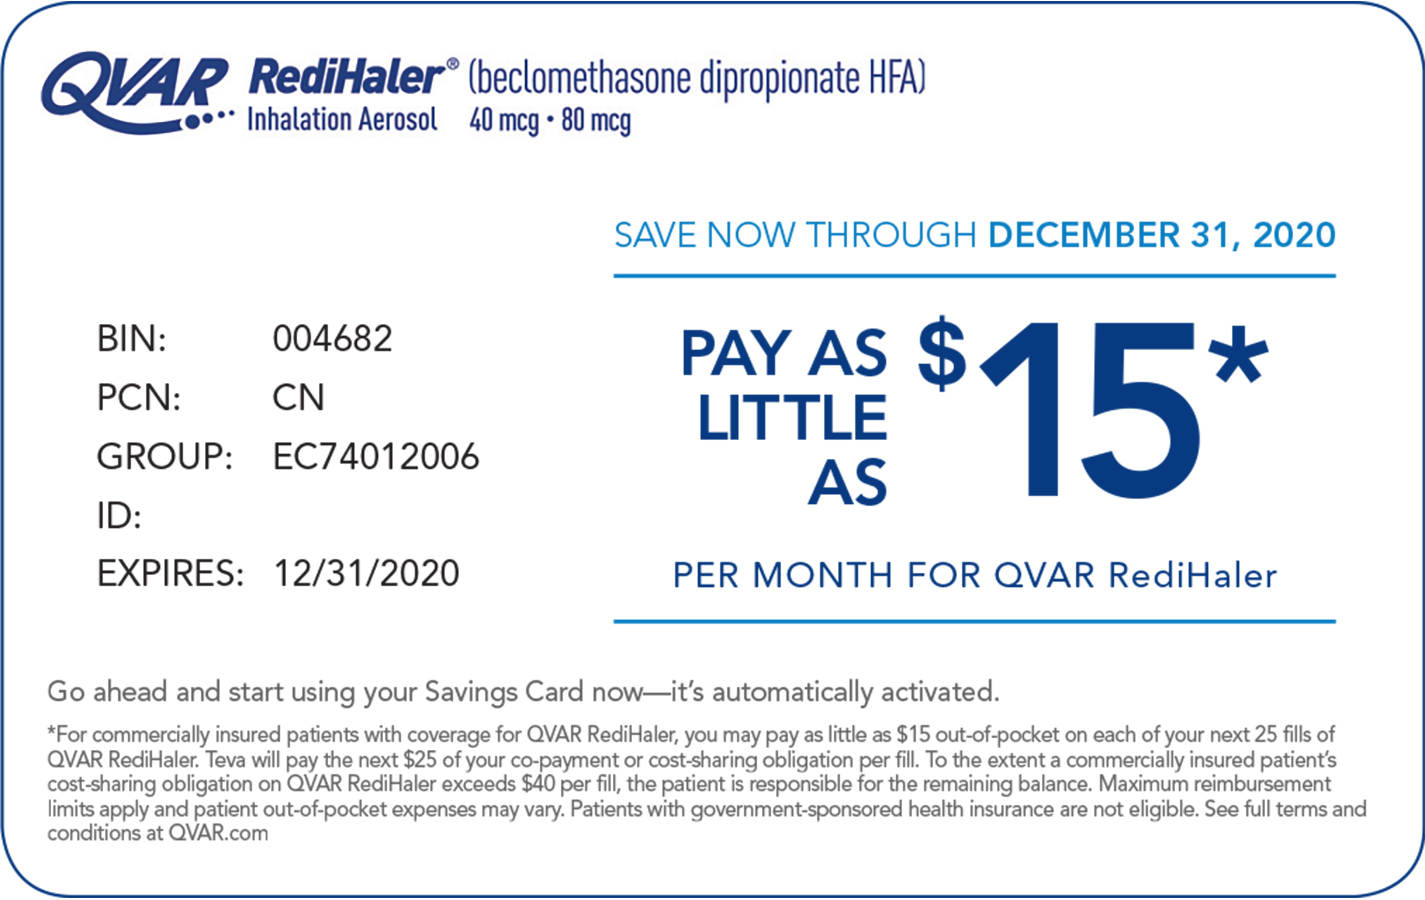 Savings Card QVAR® RediHaler™ (beclomethasone dipropionate HFA)